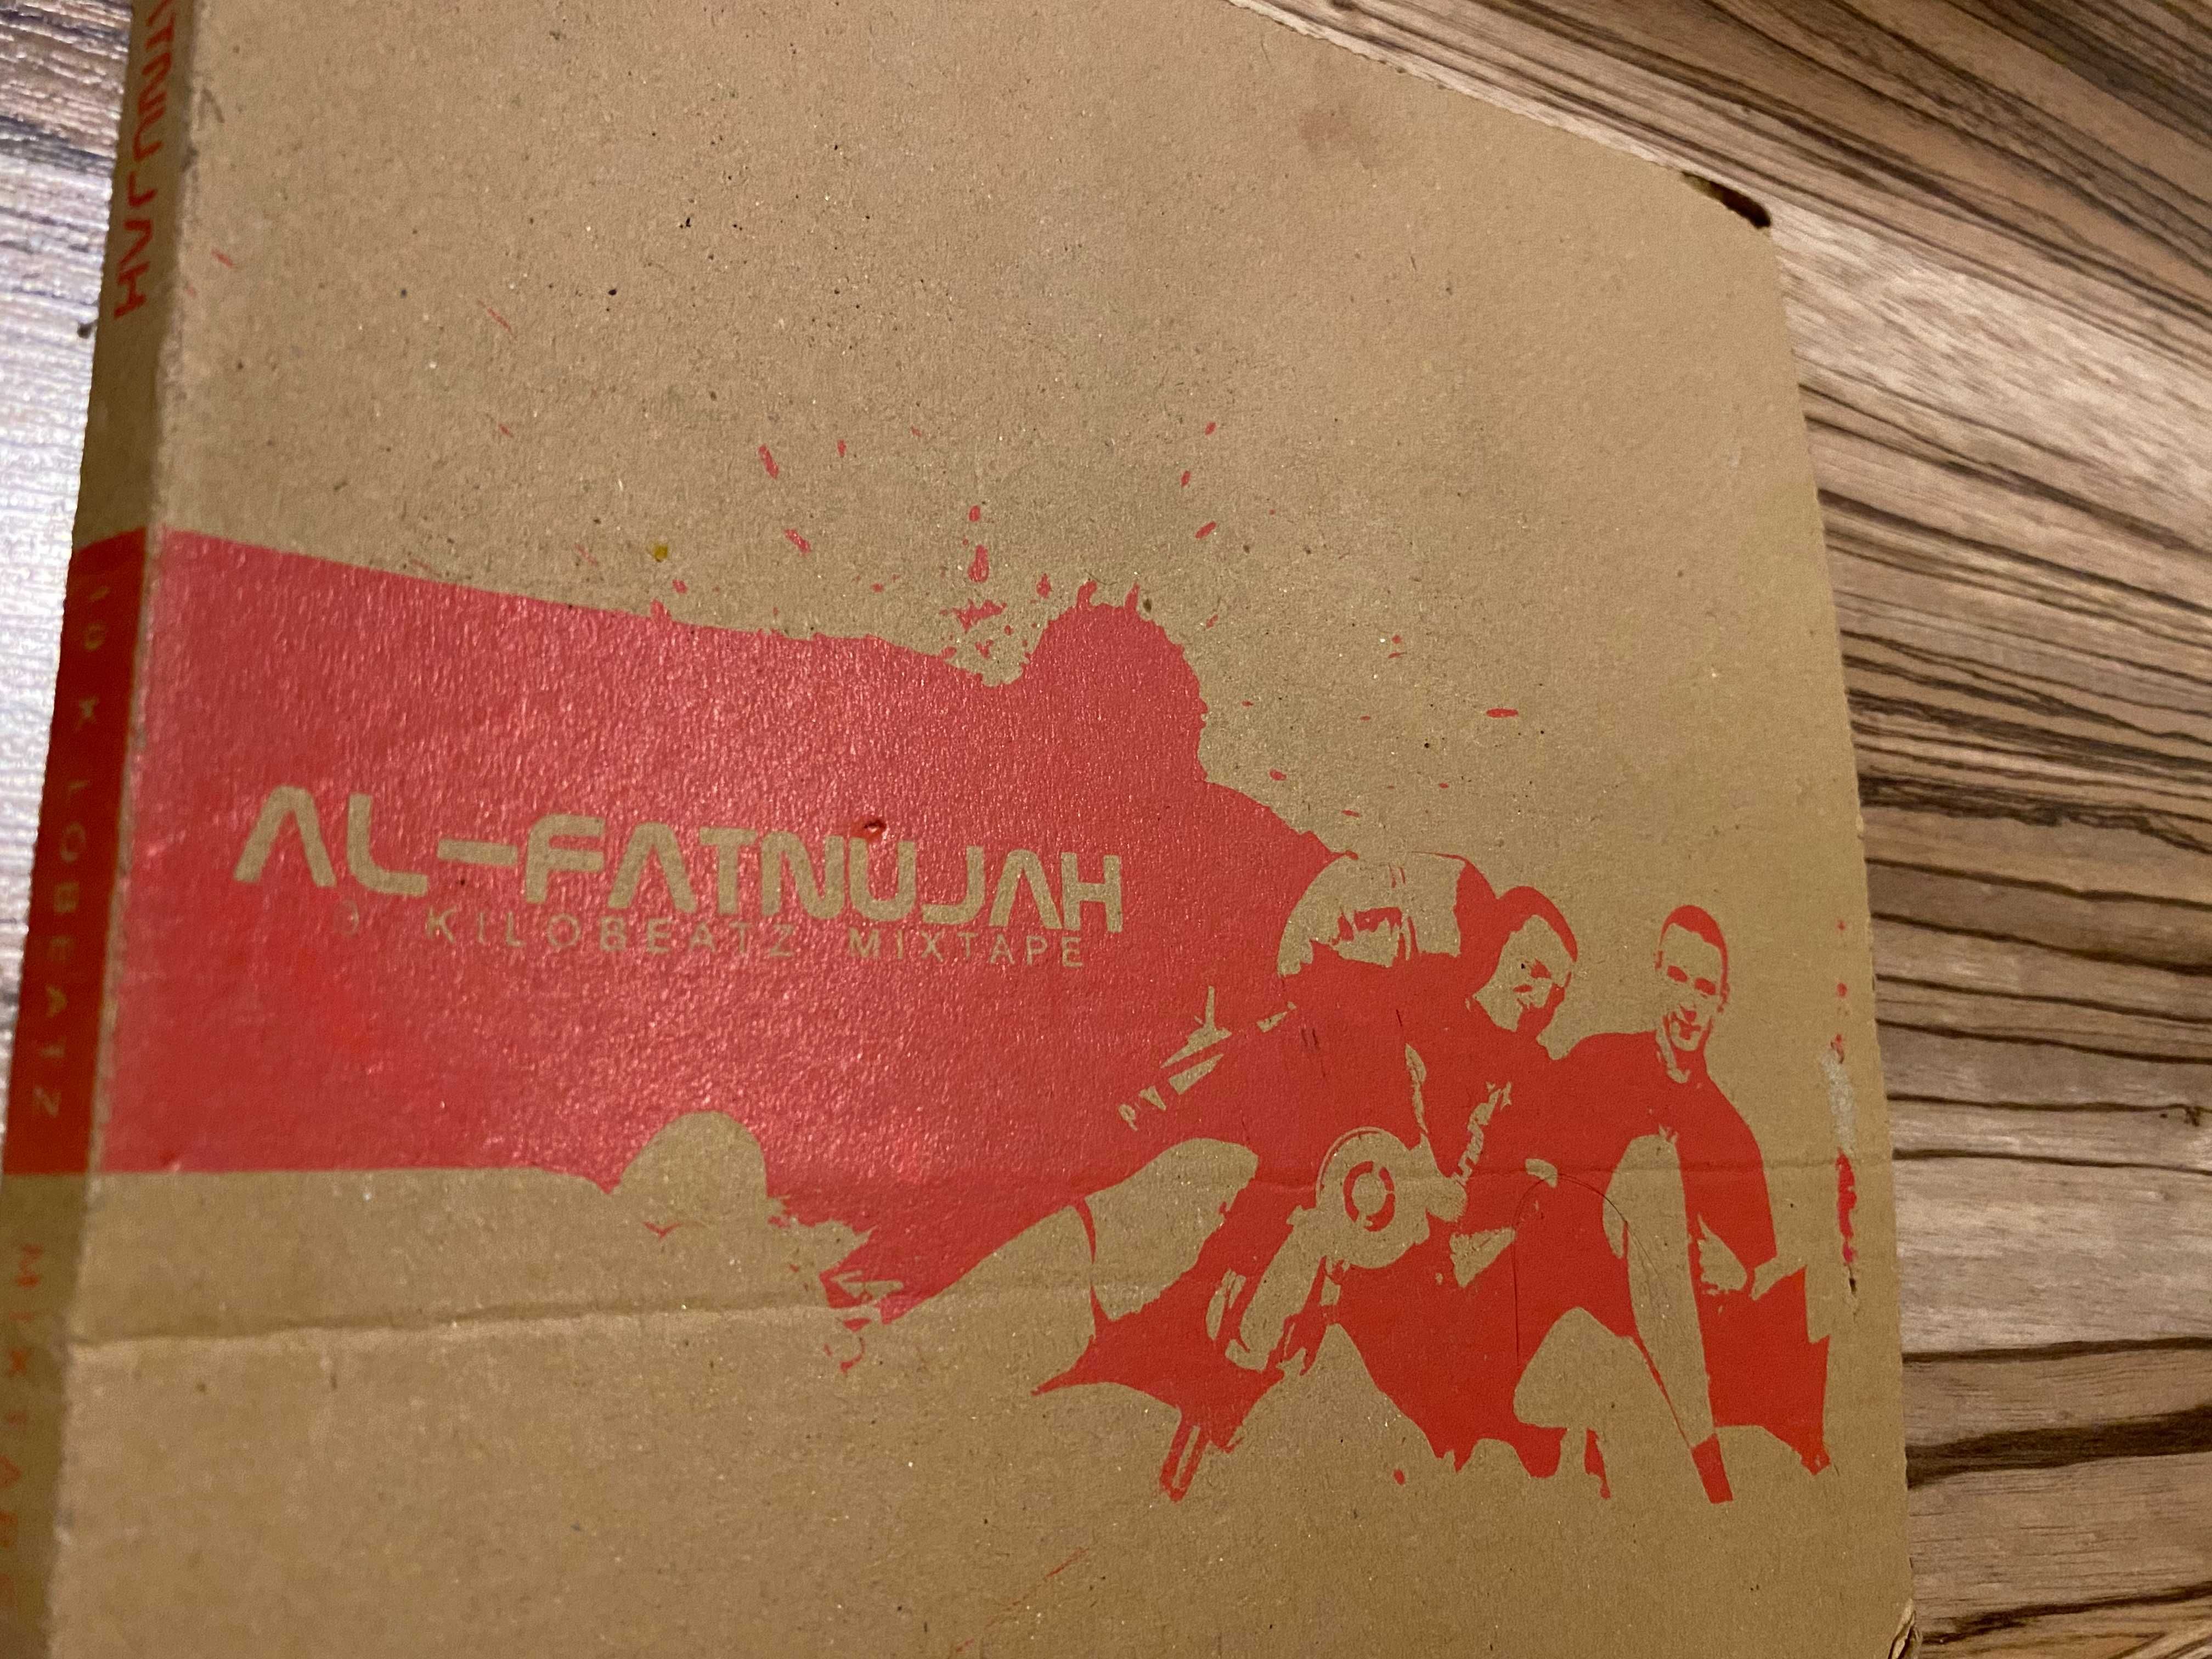 Al Fatnujah -10 kolbeatz mixtape